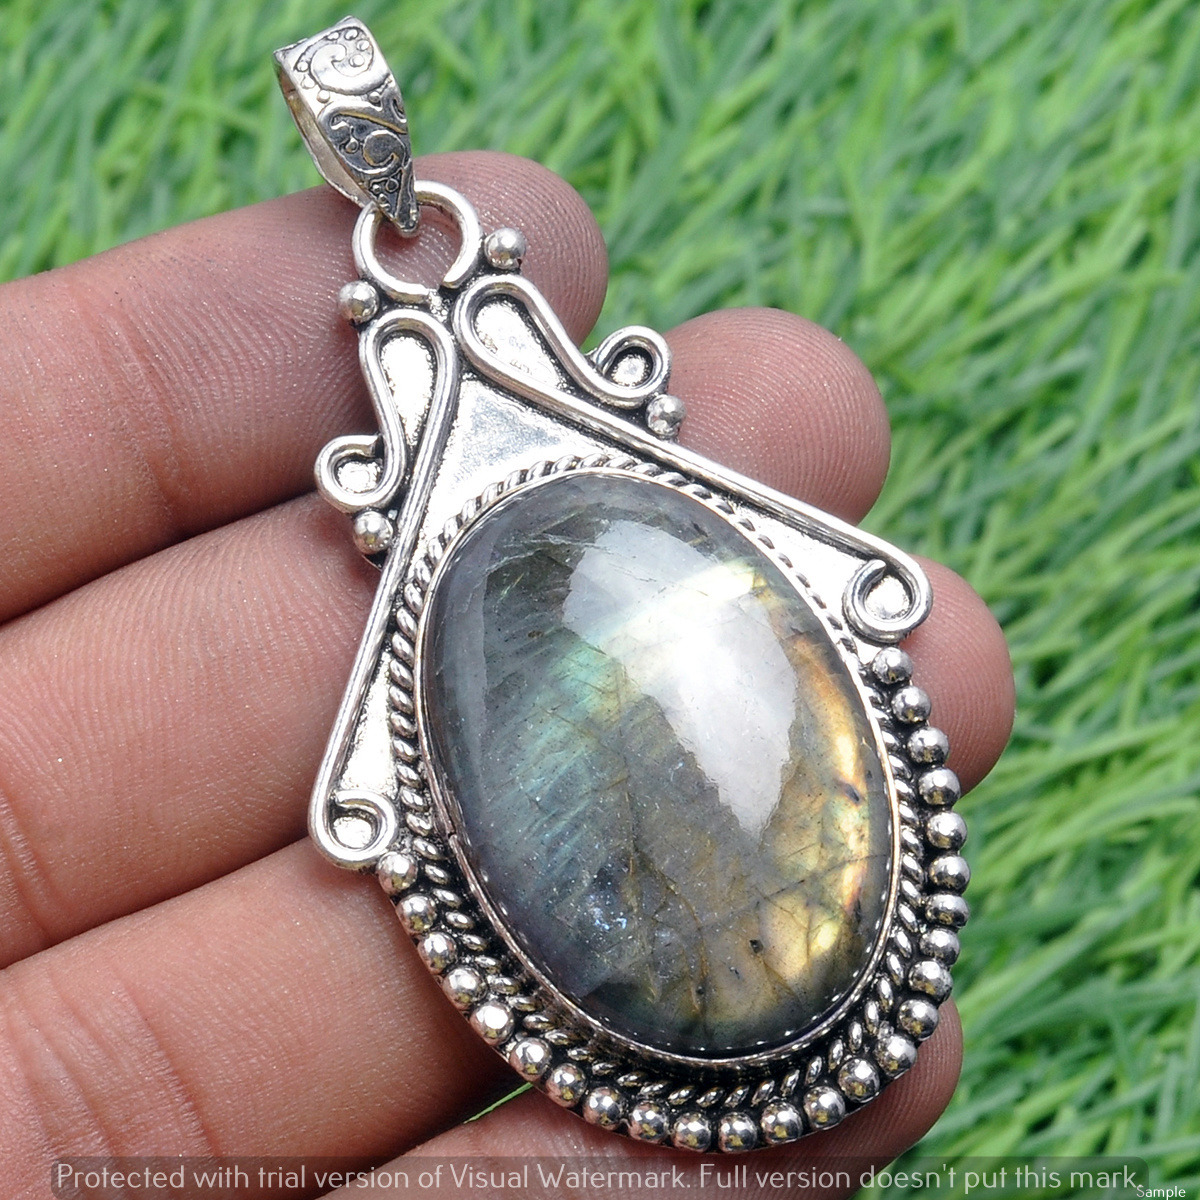 Labradorite Gemstone Handmade Pendant 925 Sterling Silver Jewelry DP-3736